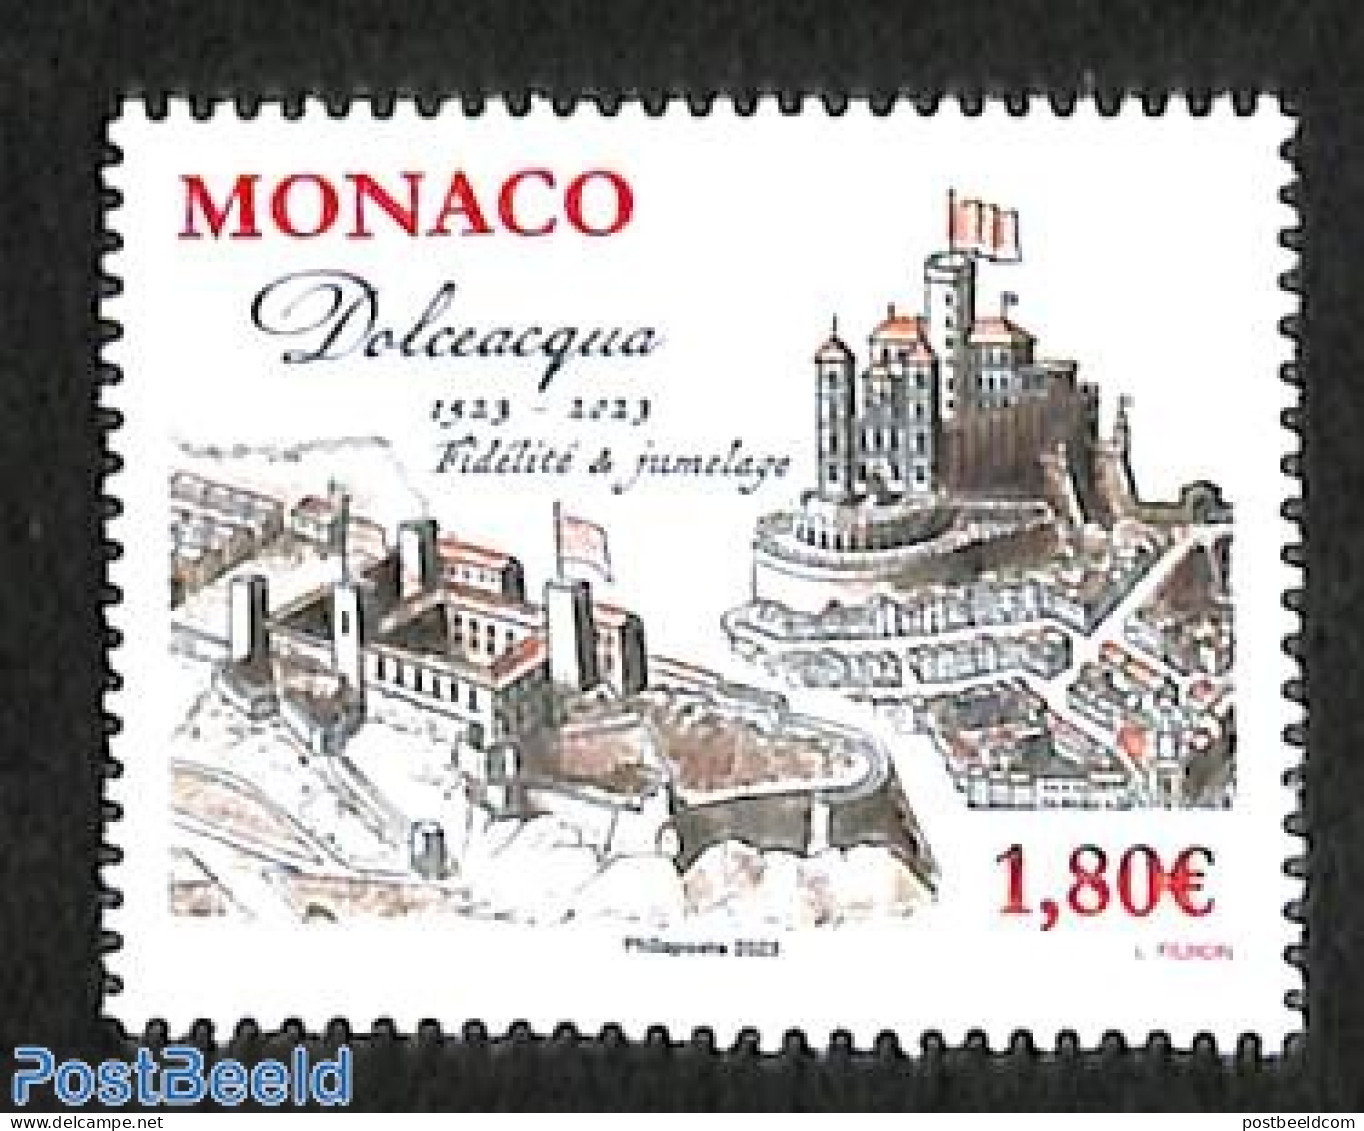 Monaco 2023 Dolceaqua 1v, Mint NH, Art - Castles & Fortifications - Neufs